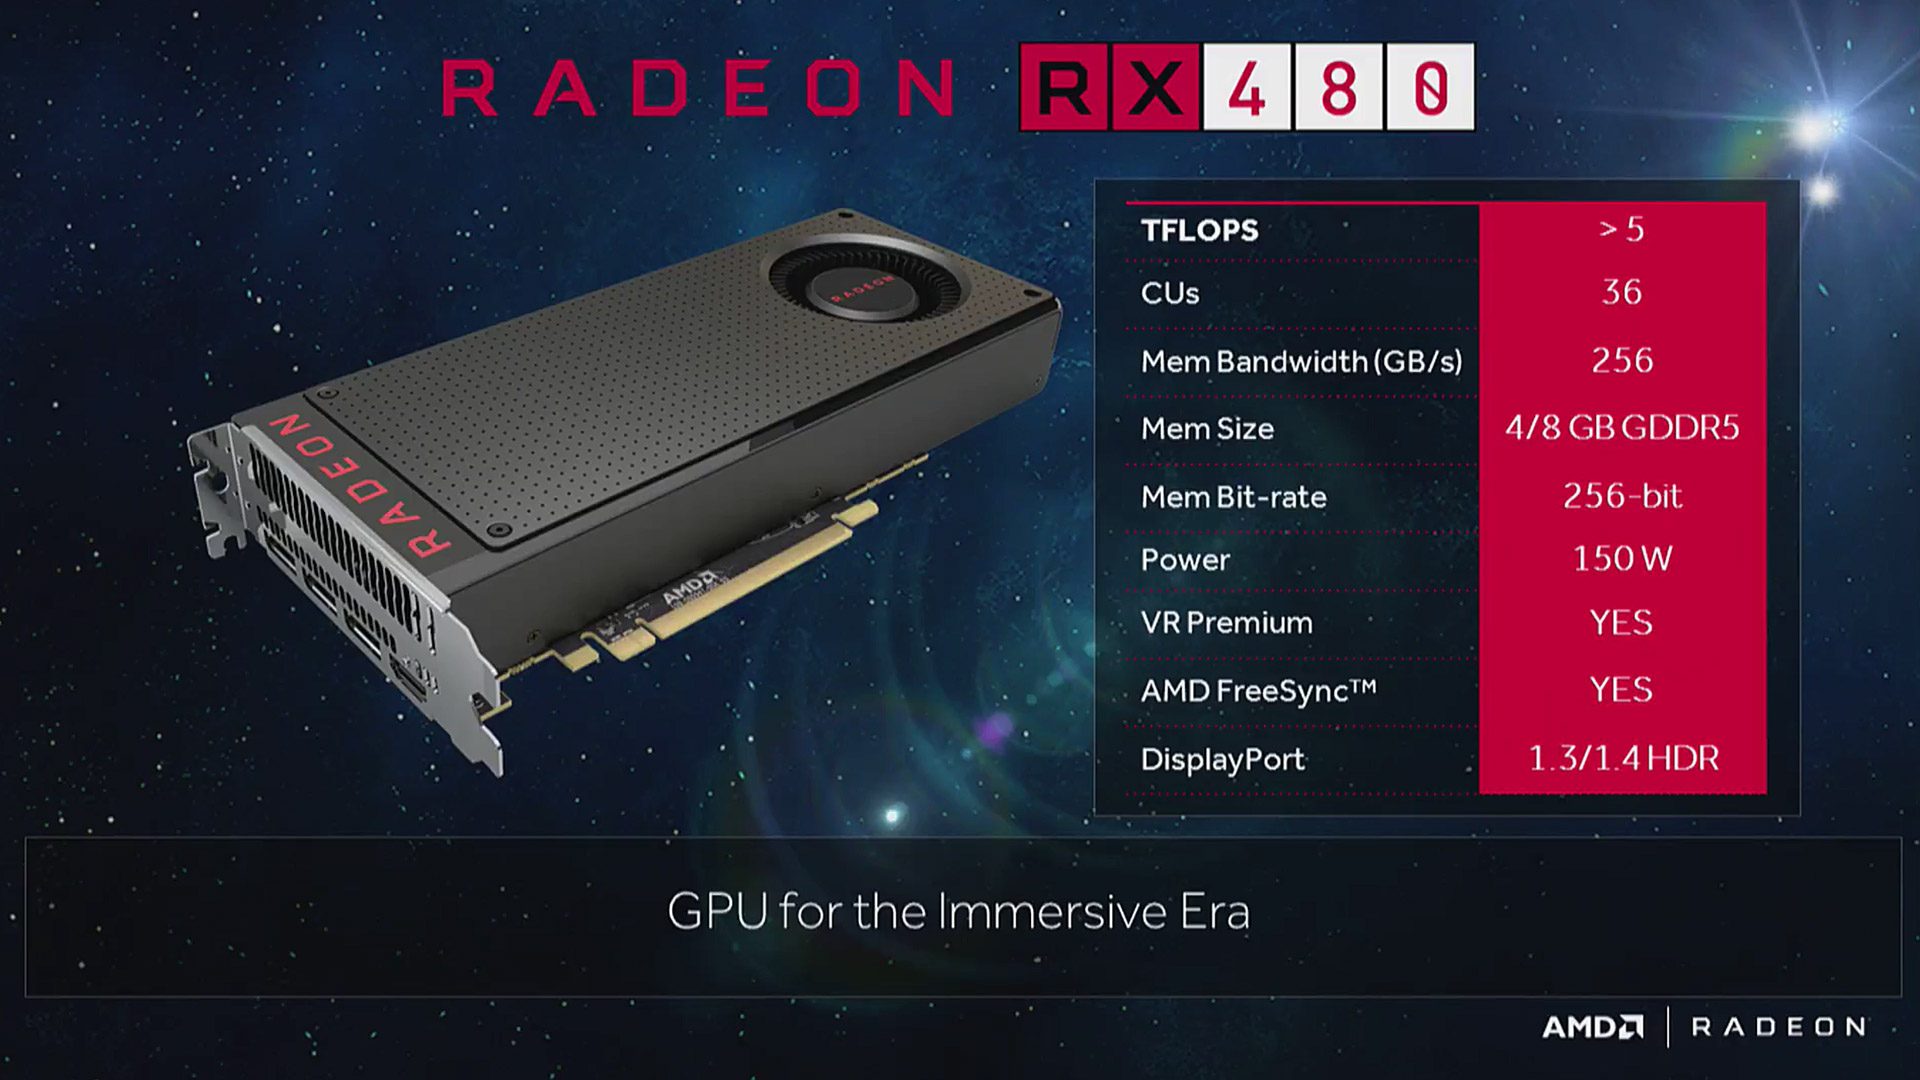 Amazon Jungle Popular camera AMD Announces RX 480 GPU at $199, Specs, Release Date, and More